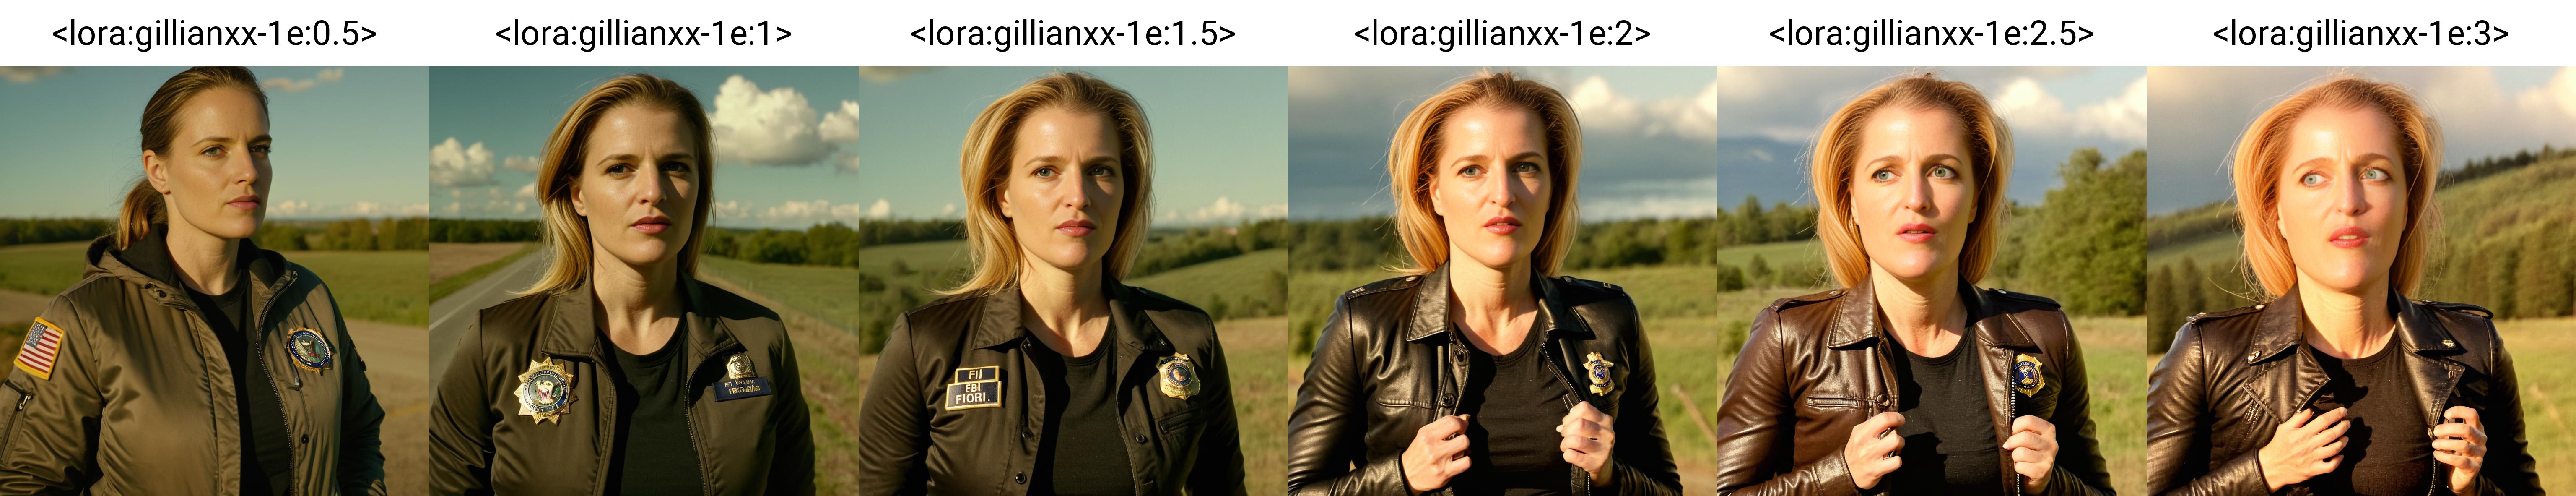 Gillian Anderson SDXL image by Ben4Arts